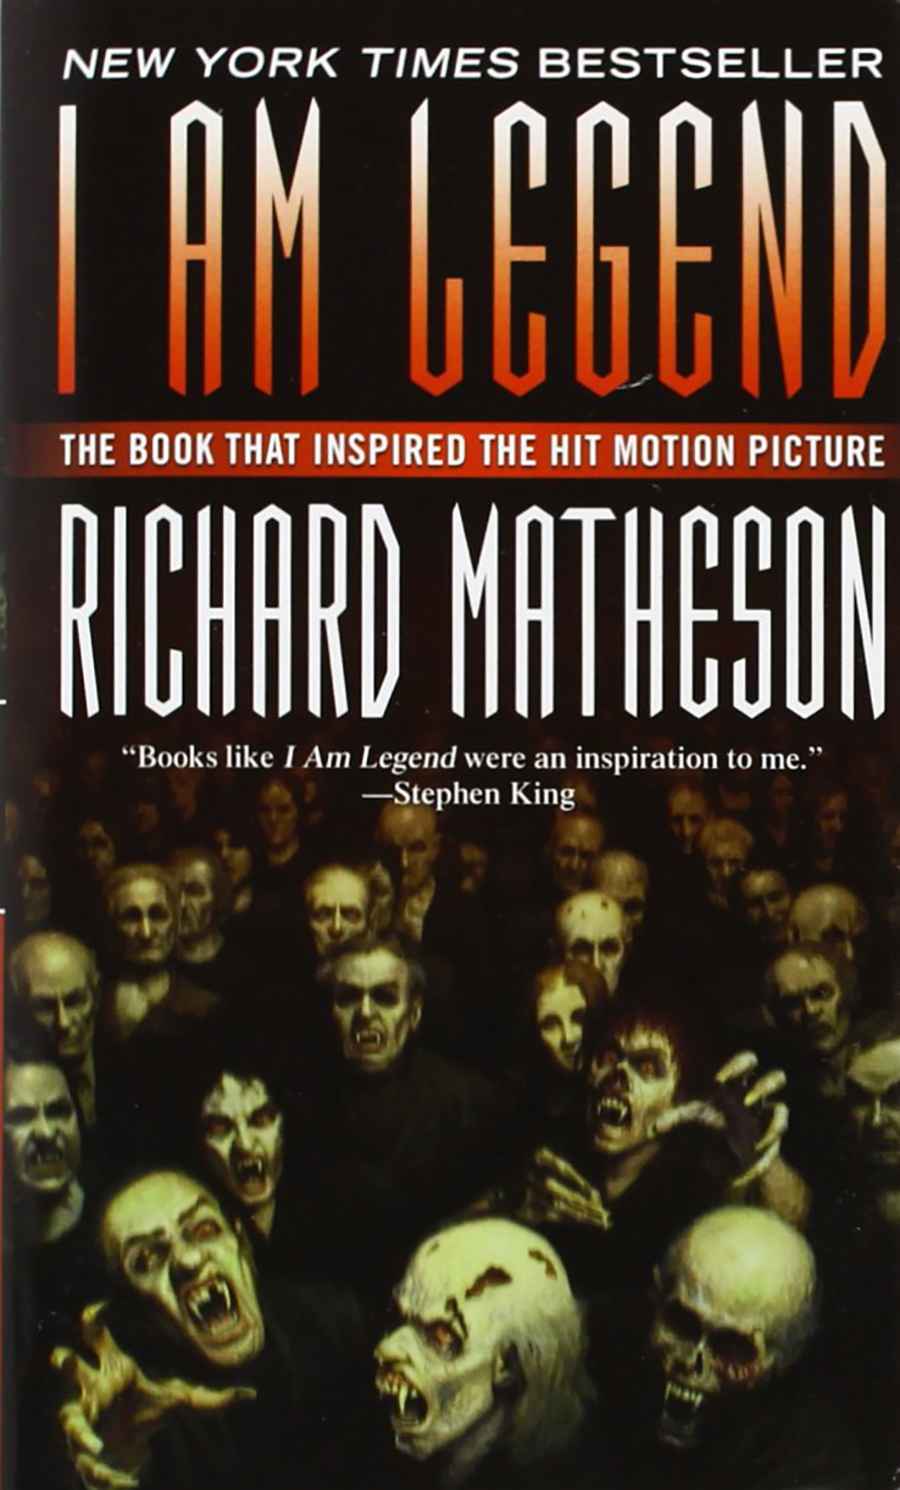 I am the legend - Richard Matheson